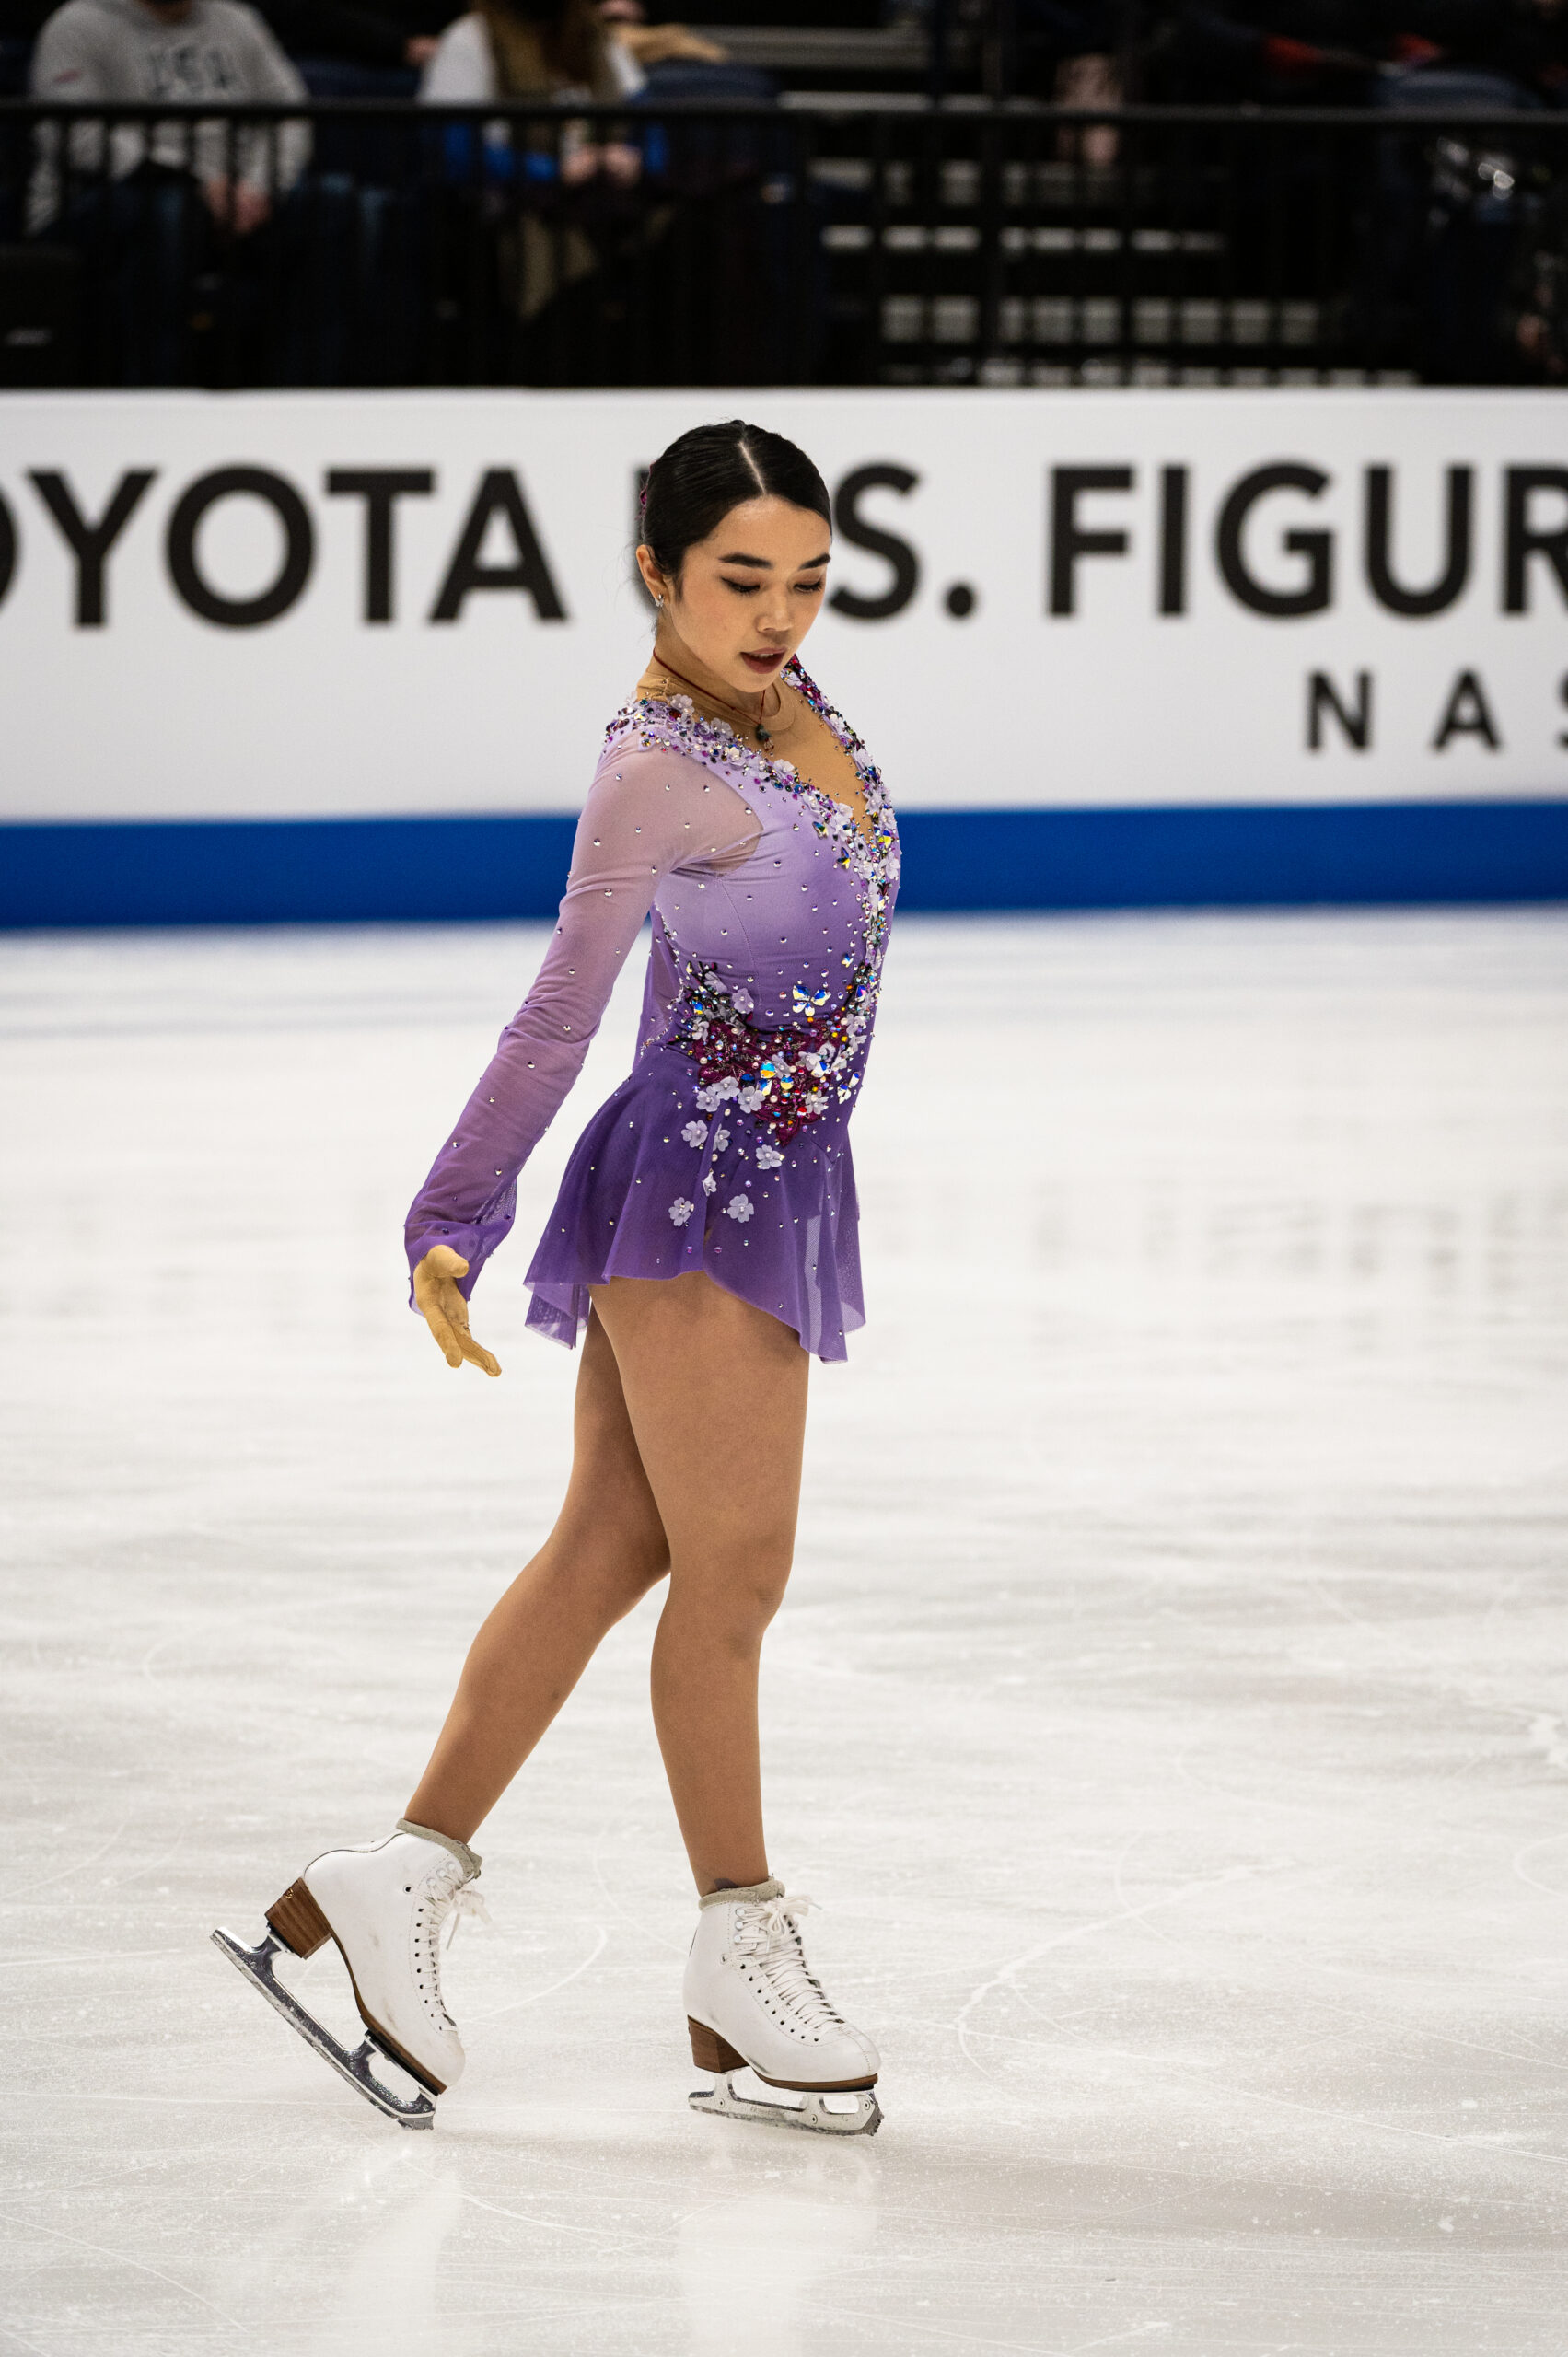  Karen Chen Nasvhille 2022 US Figure Skating